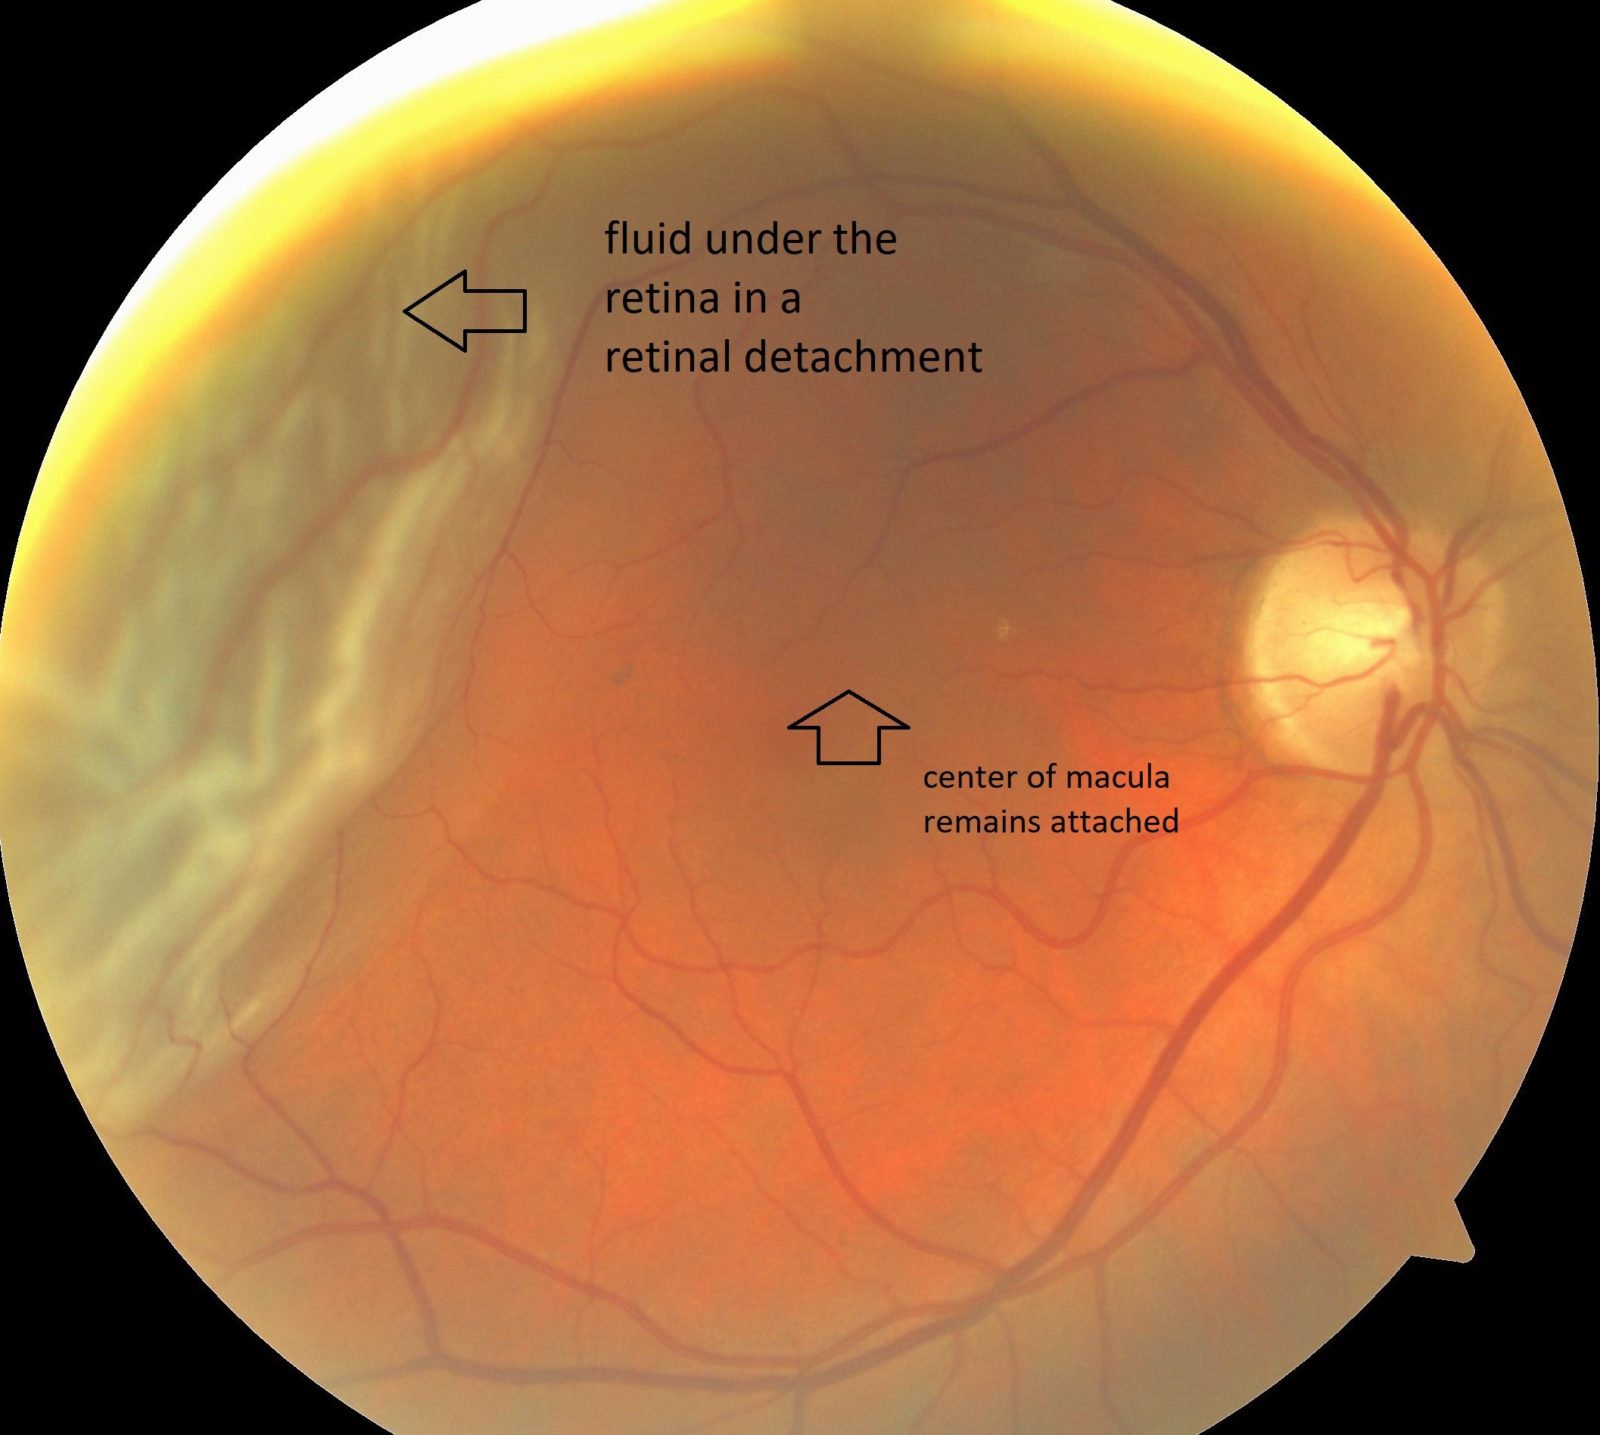 retina specialist near me laconia n.h.03246